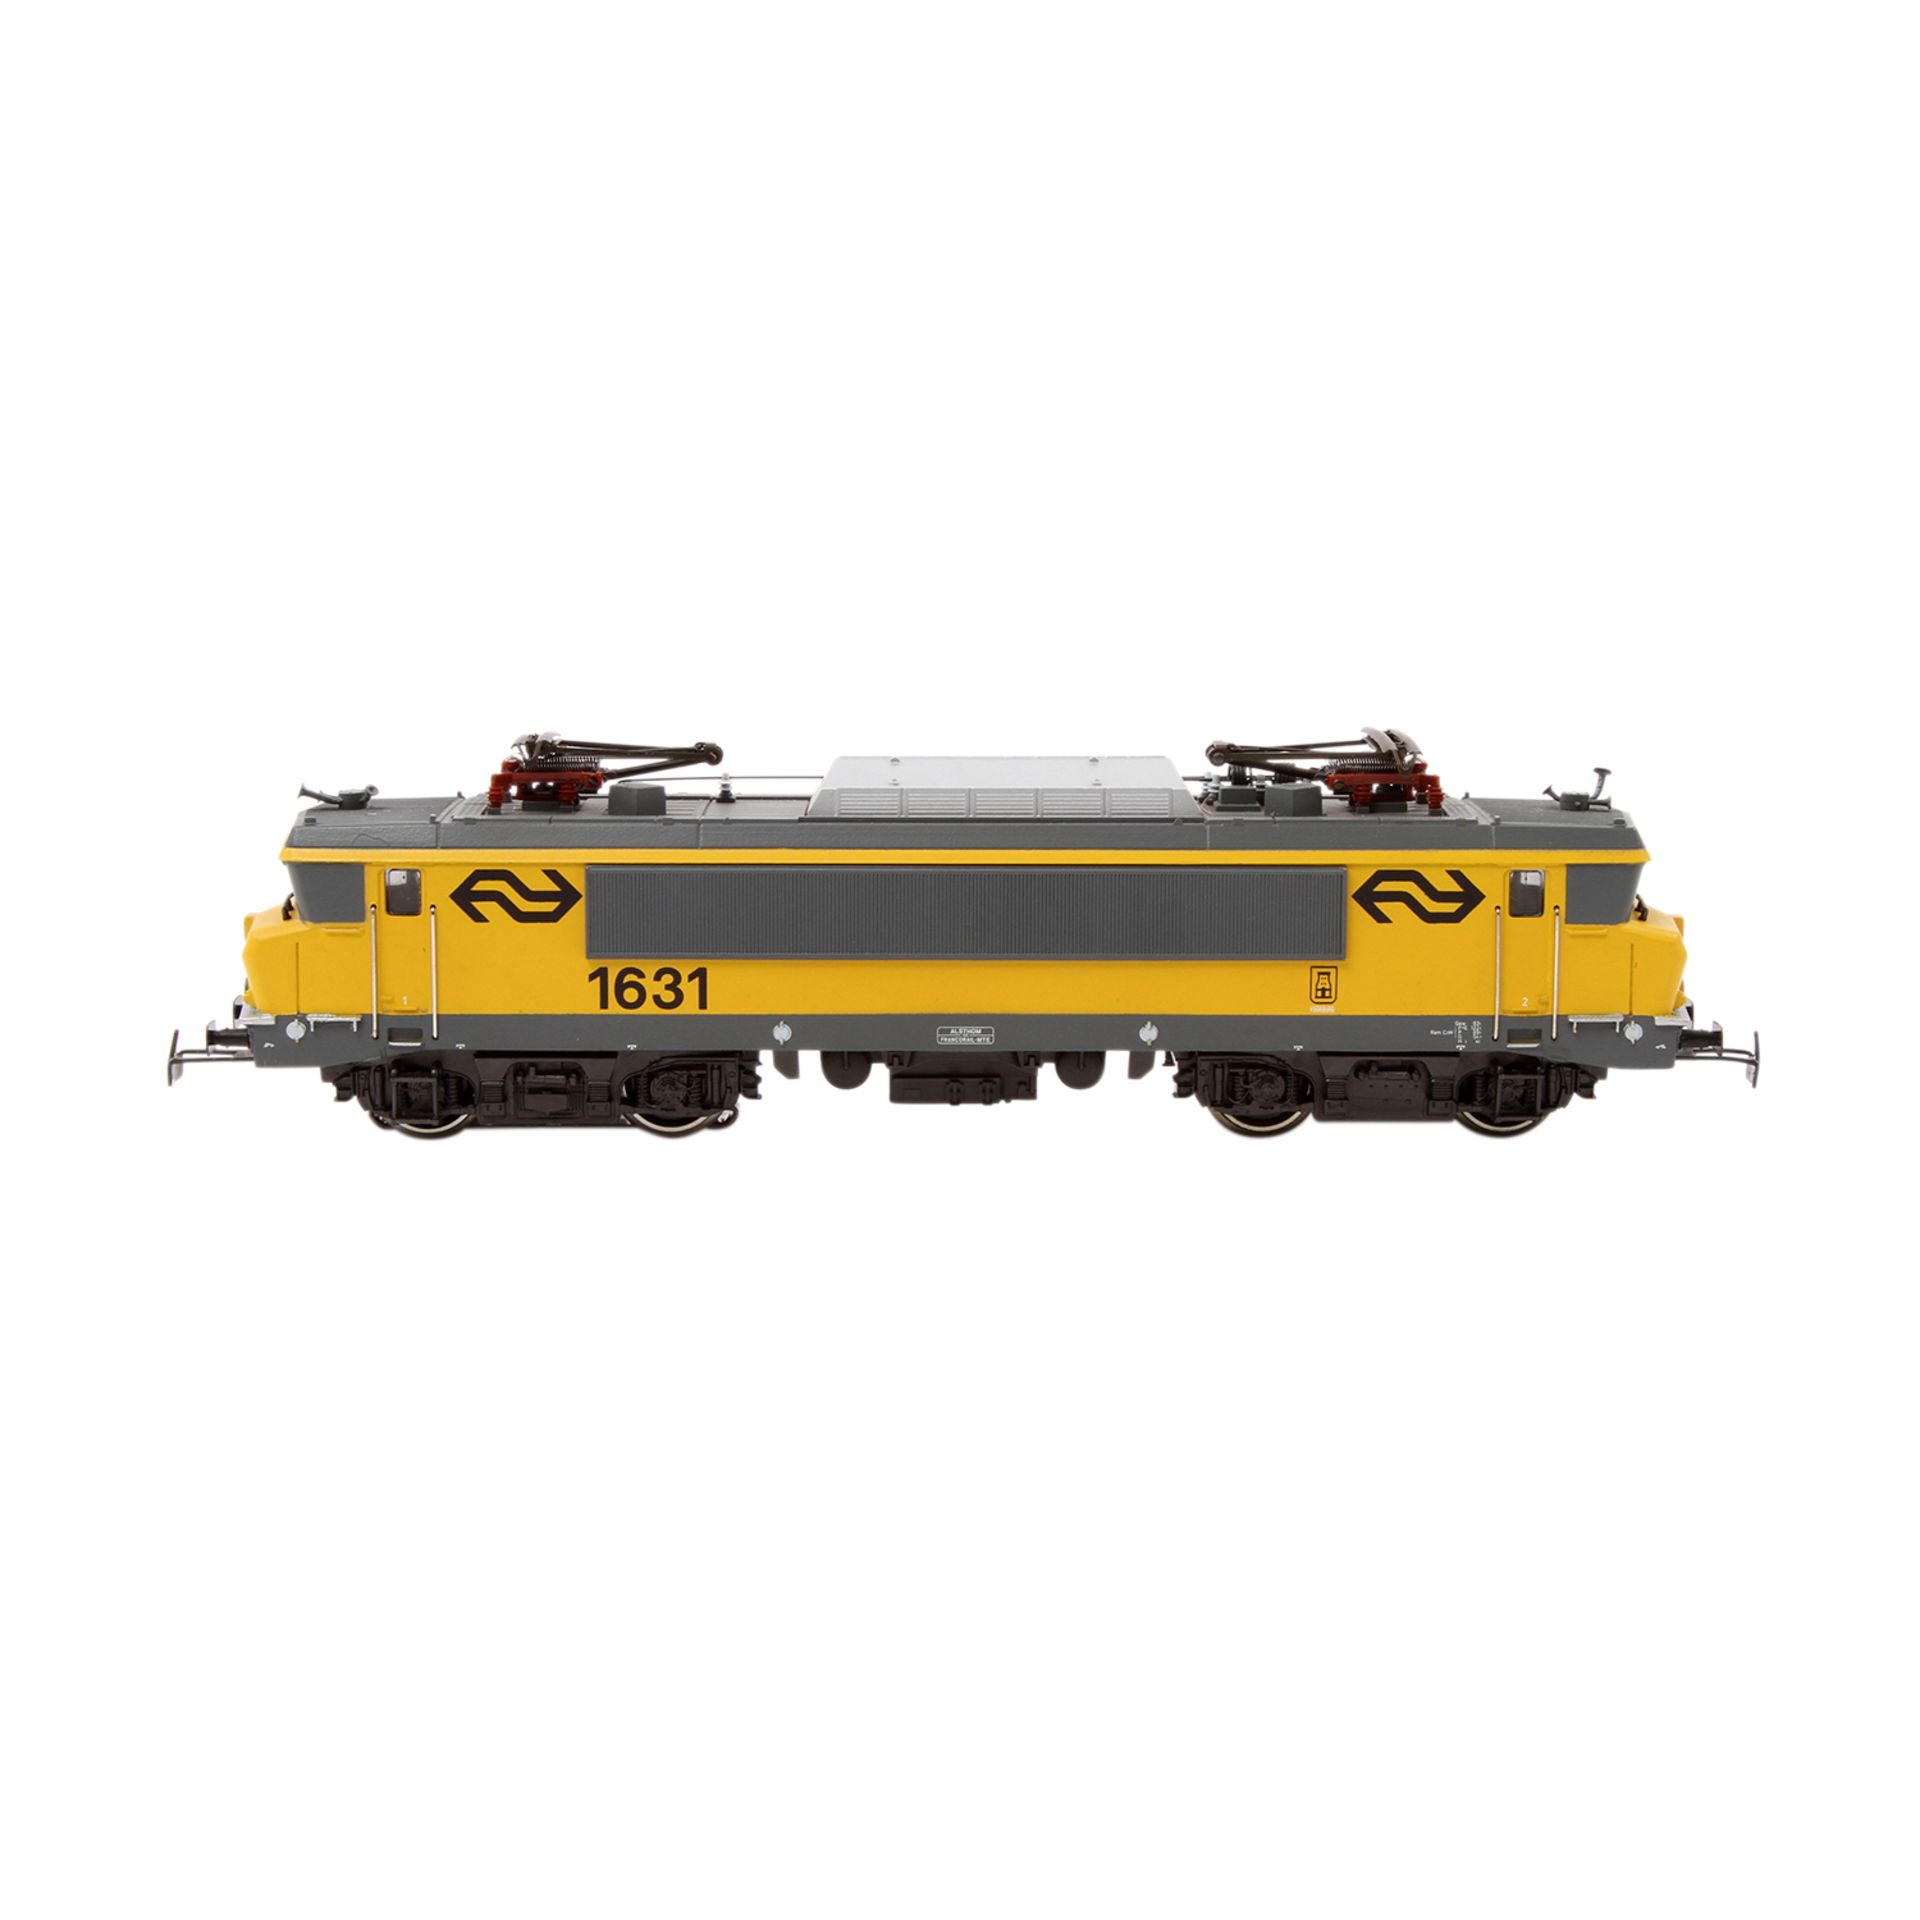 MÄRKLIN E-Lok 3326, Spur H0, Guss-Gehäuse, grau/gelb, BR 1600 der NS, BN 1631. Im Originalkarton - Bild 3 aus 8